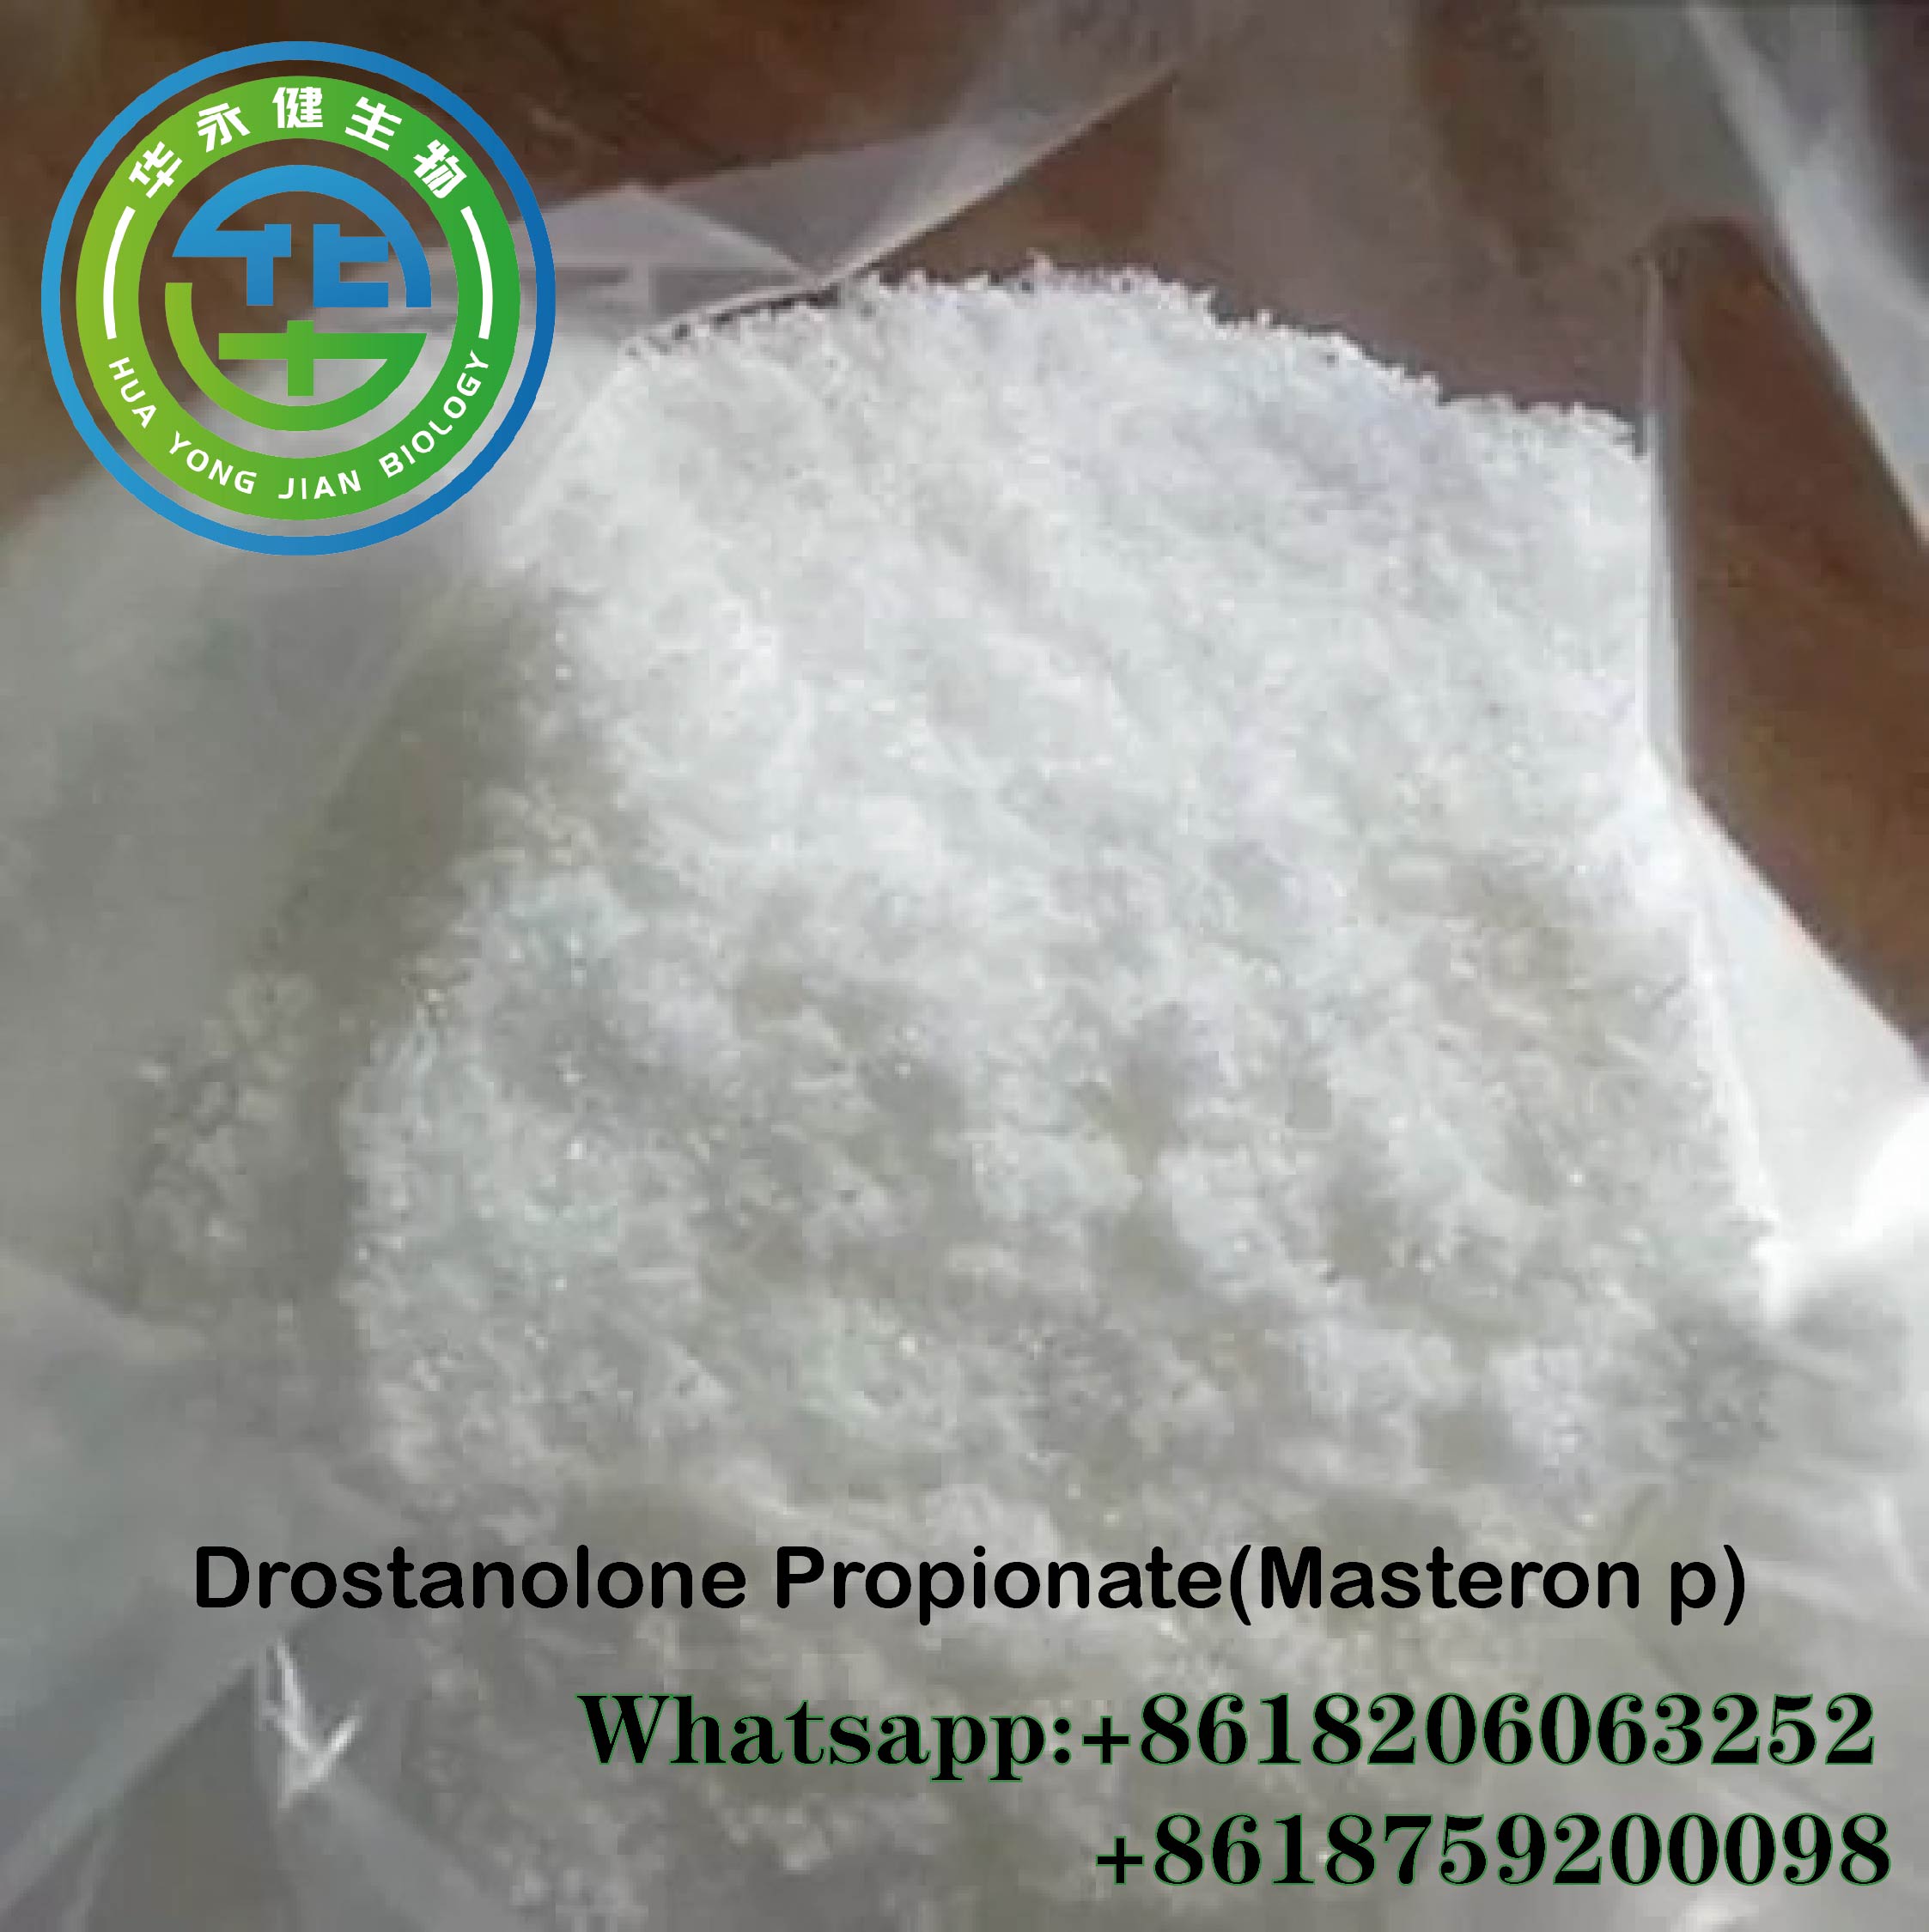 Pagpalit Drostanolone Propionate Steroid Raws Fitness Supplement Steroid Hormone Masteron Powder CasNO.521-12-0 Gipili nga Imahe